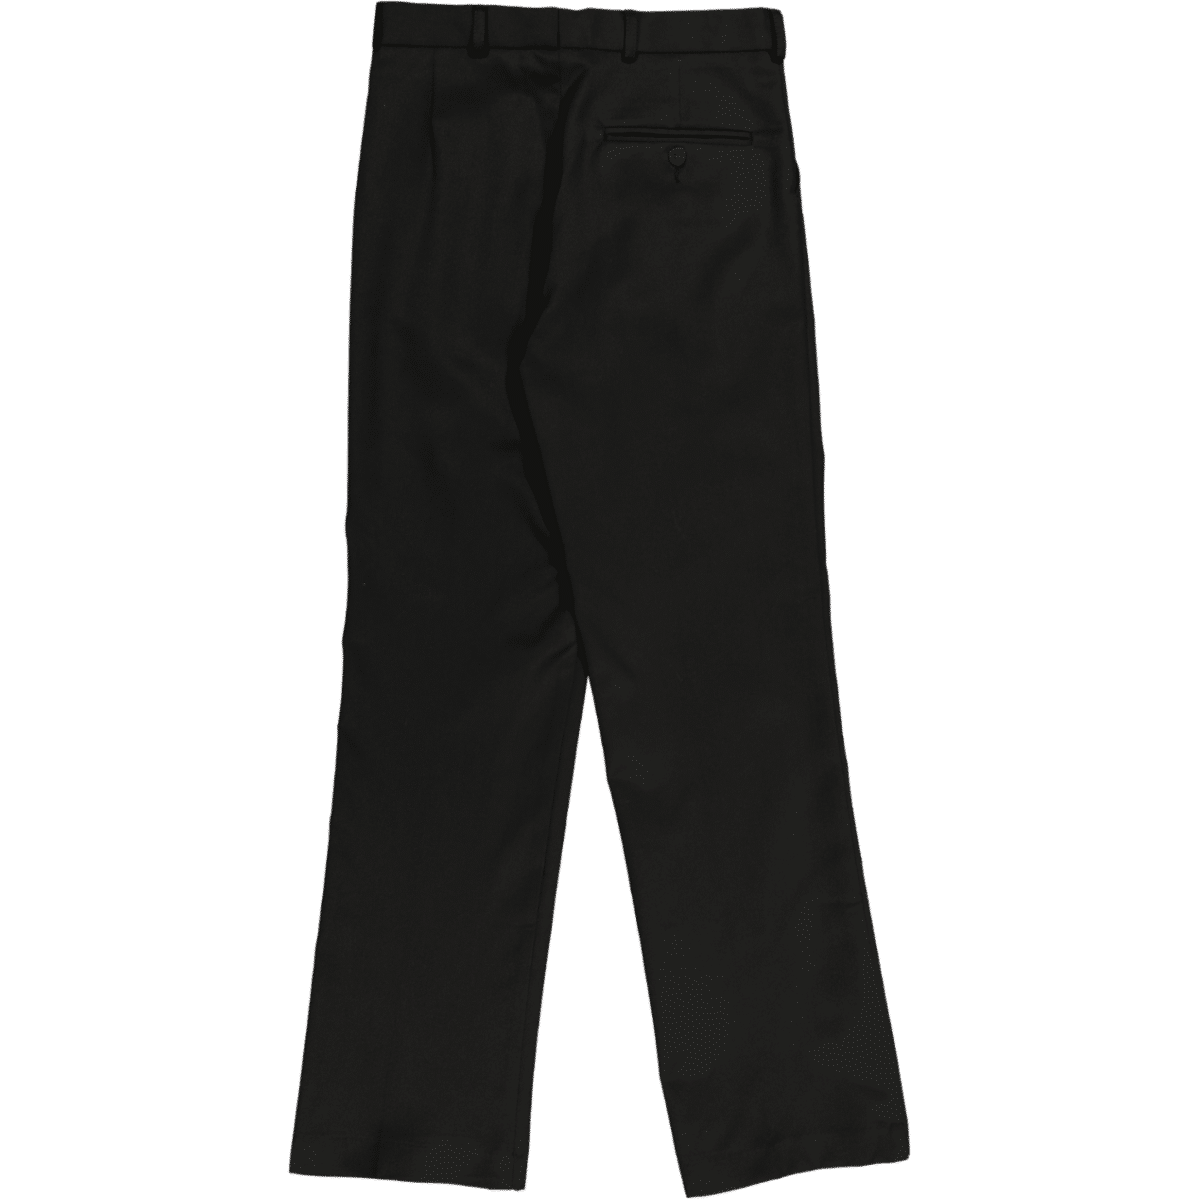 High-Waisted Wide-Leg School Uniform Pants for Girls | Old Navy